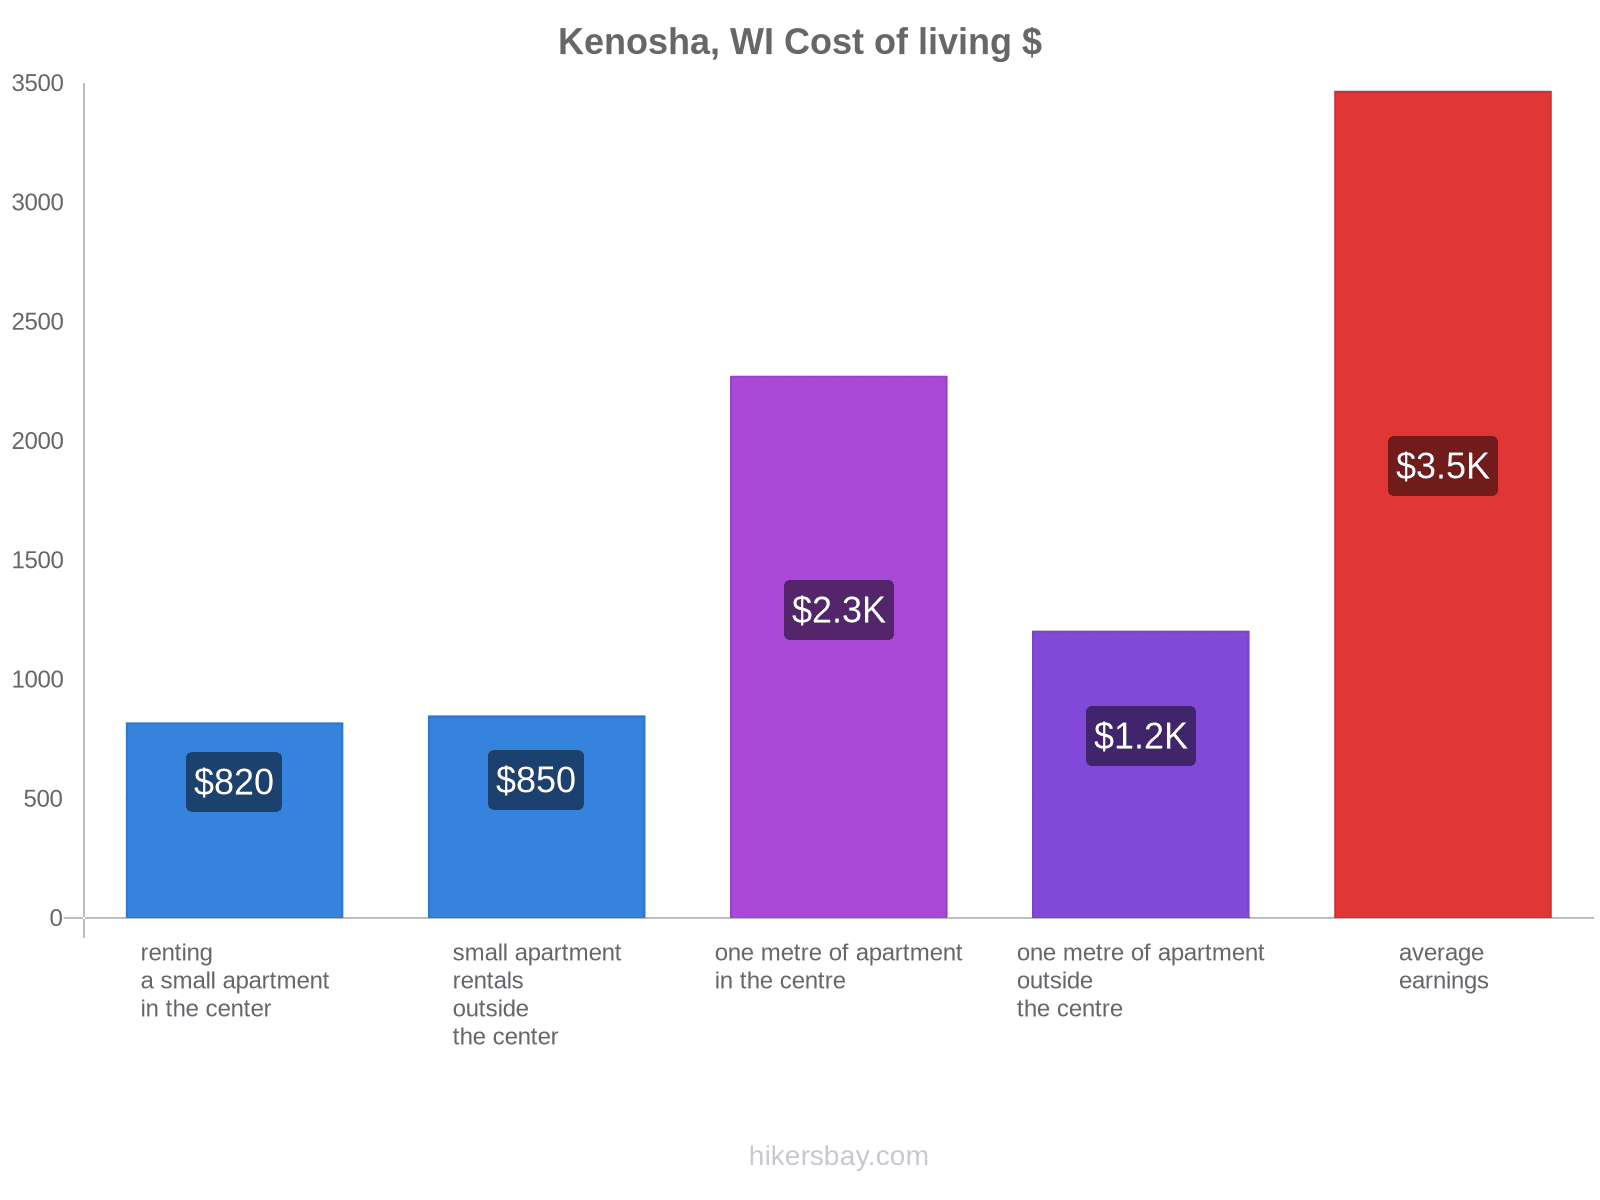 Kenosha, WI cost of living hikersbay.com